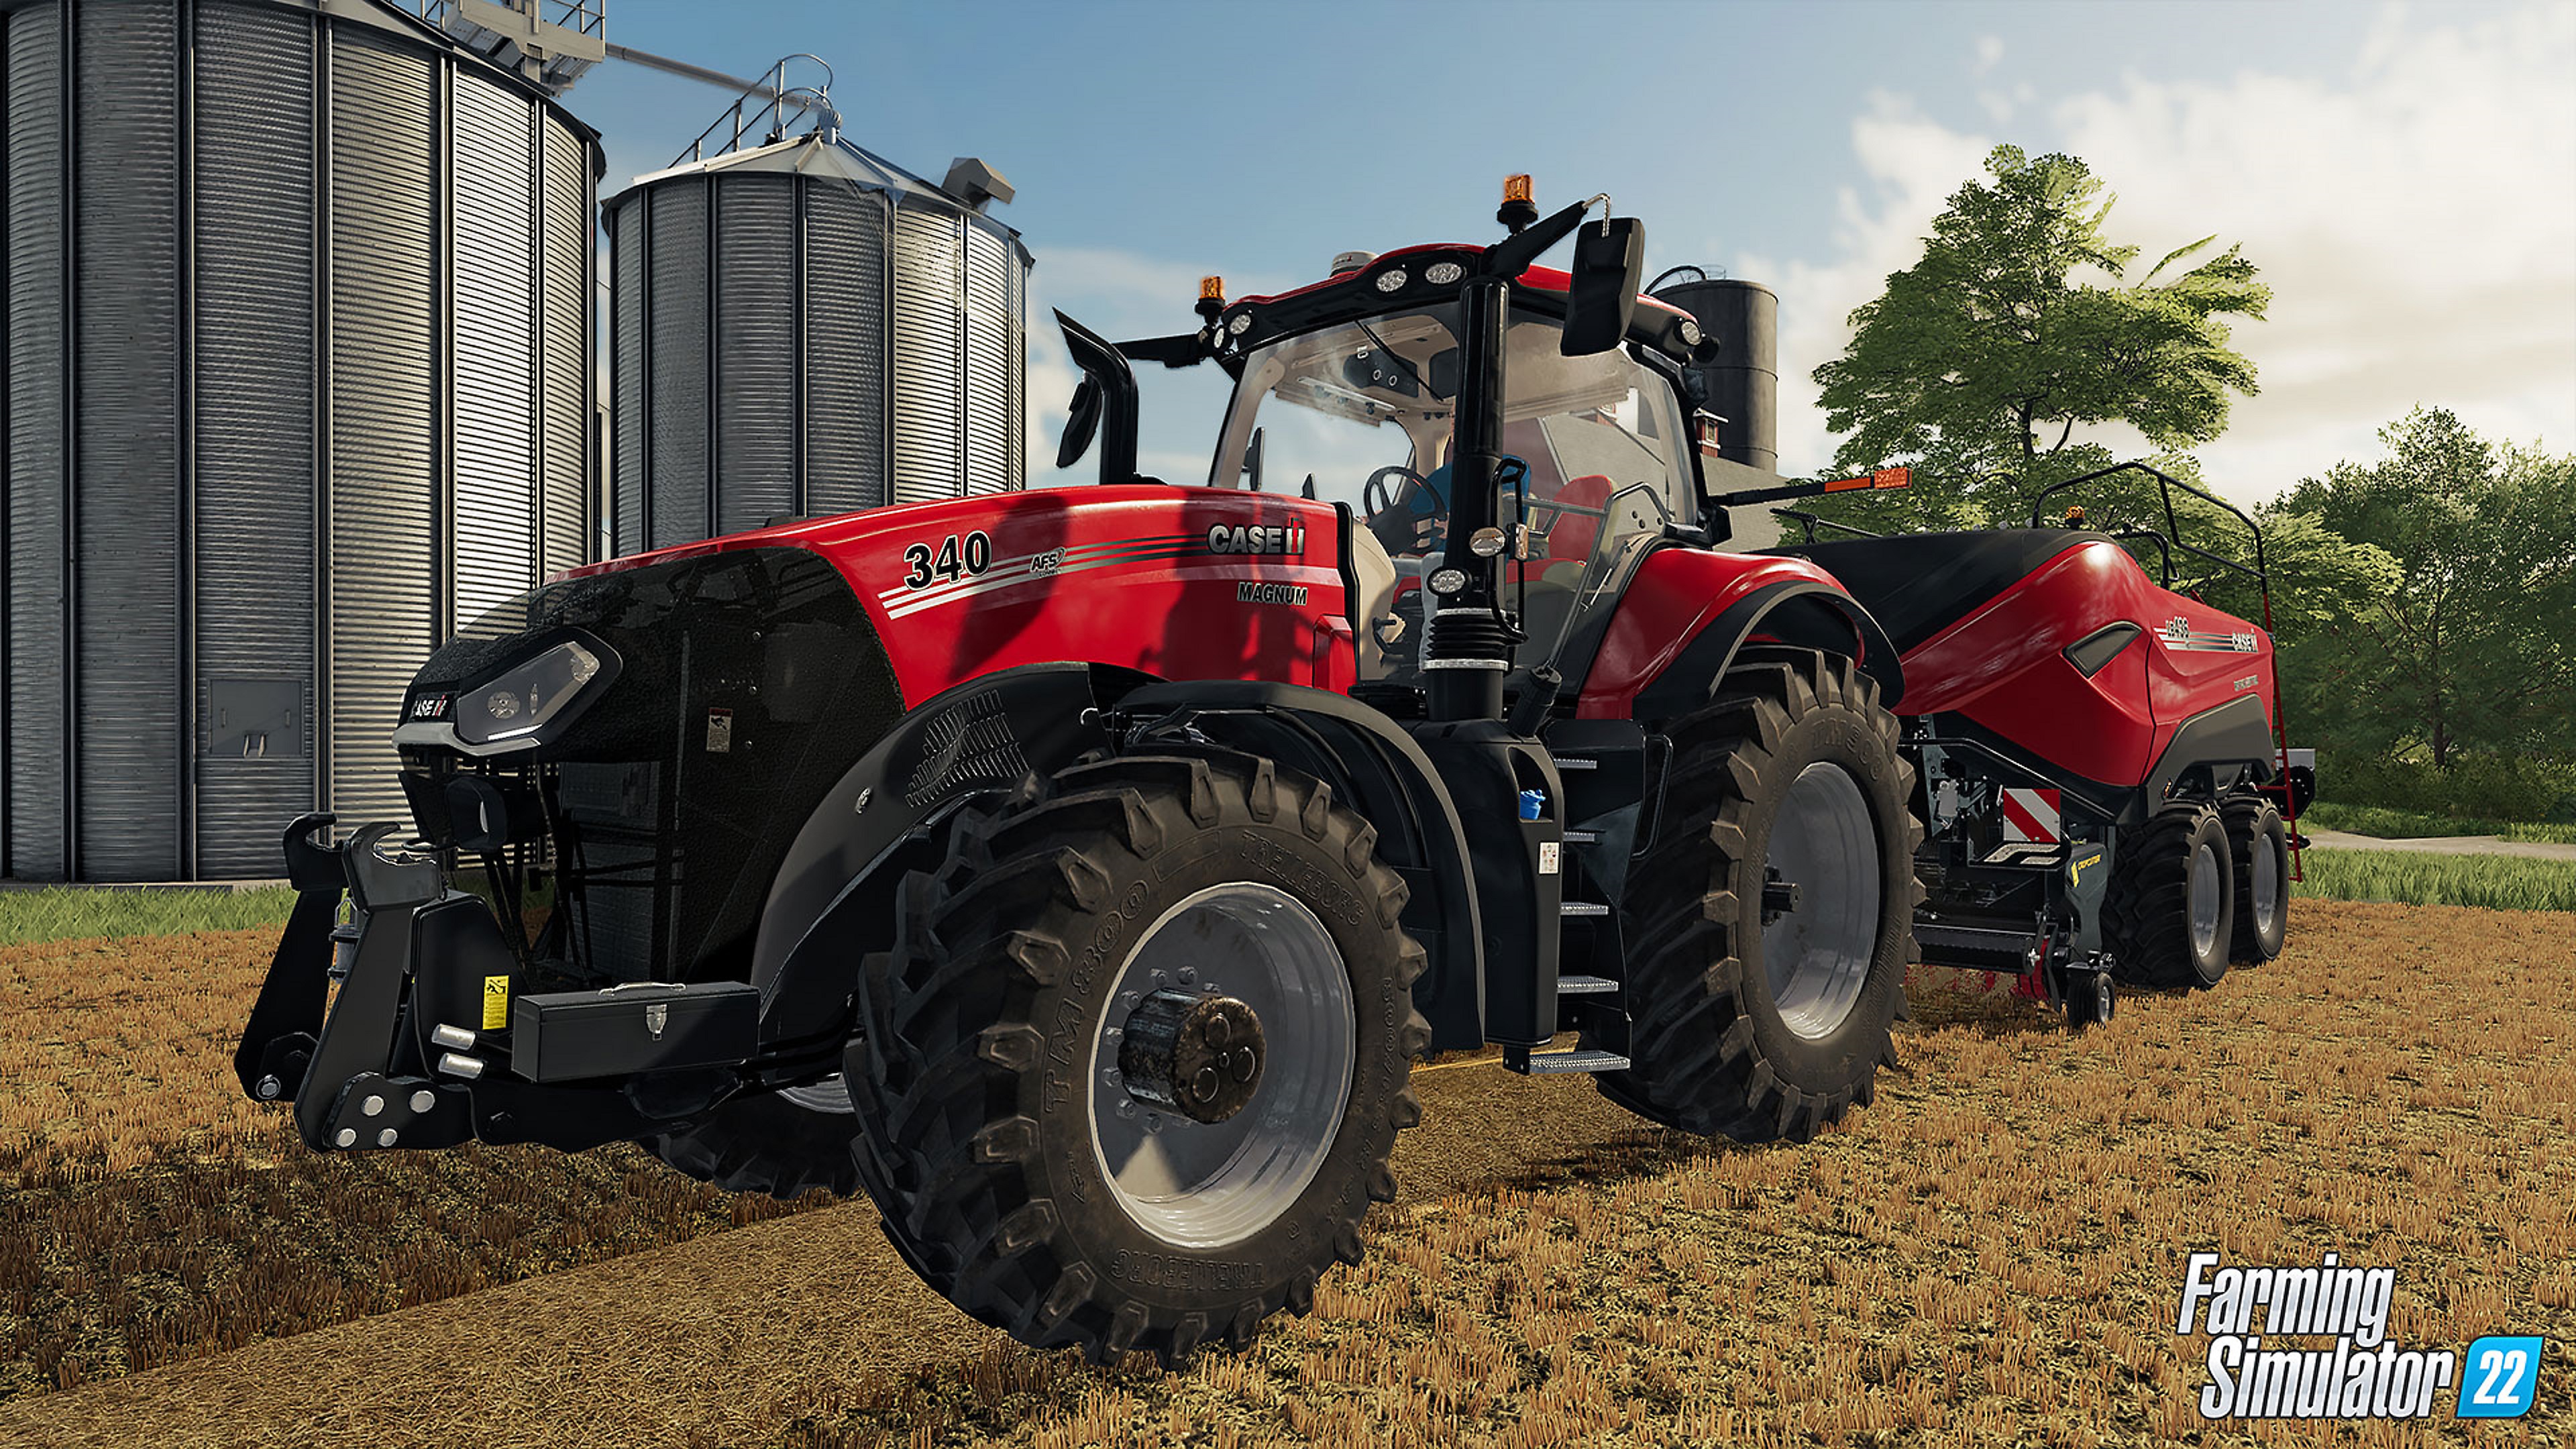 Farming Simulator 22 – снимок экрана